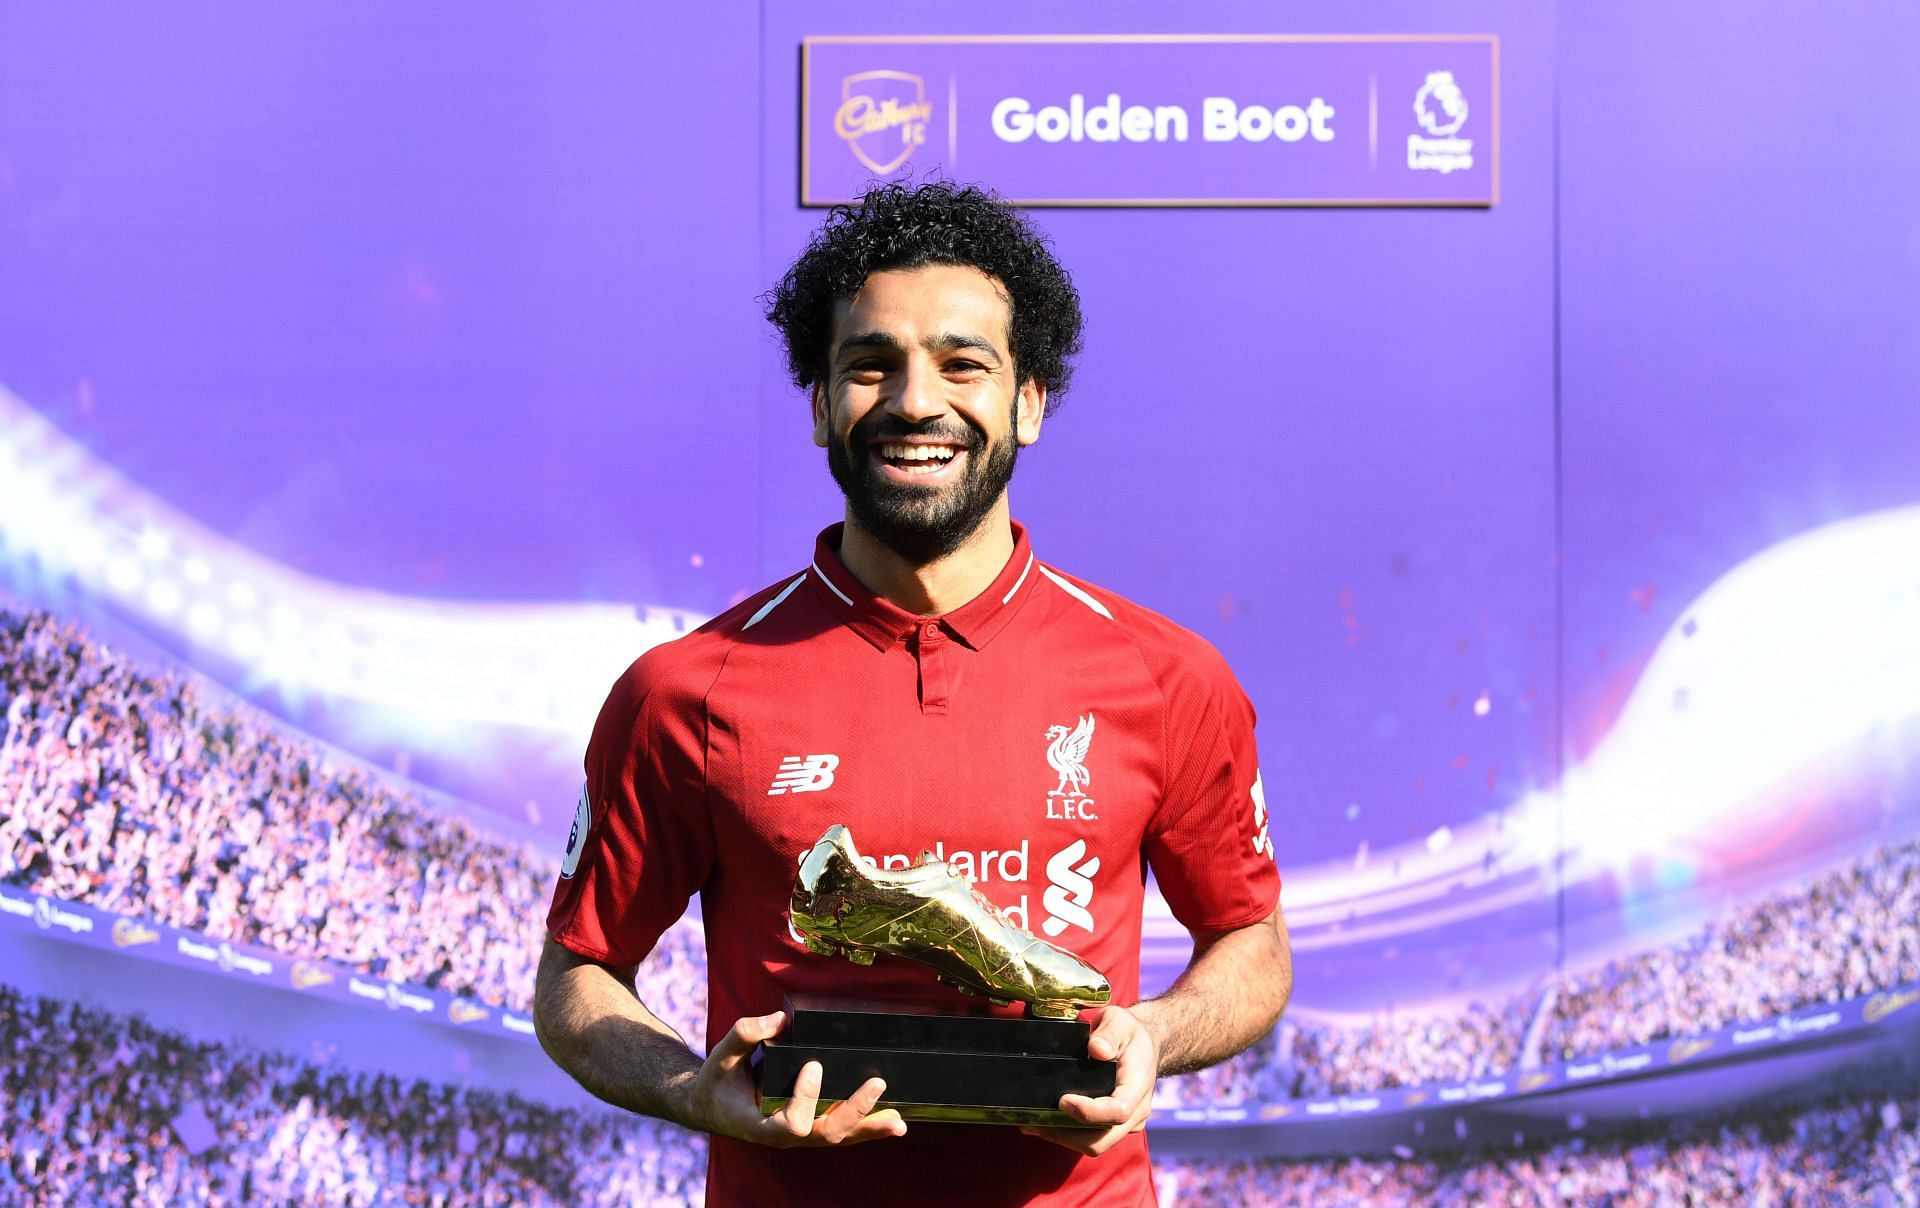 Salah won the Golden Boot in the 2017-18 season after scoring 32 goals